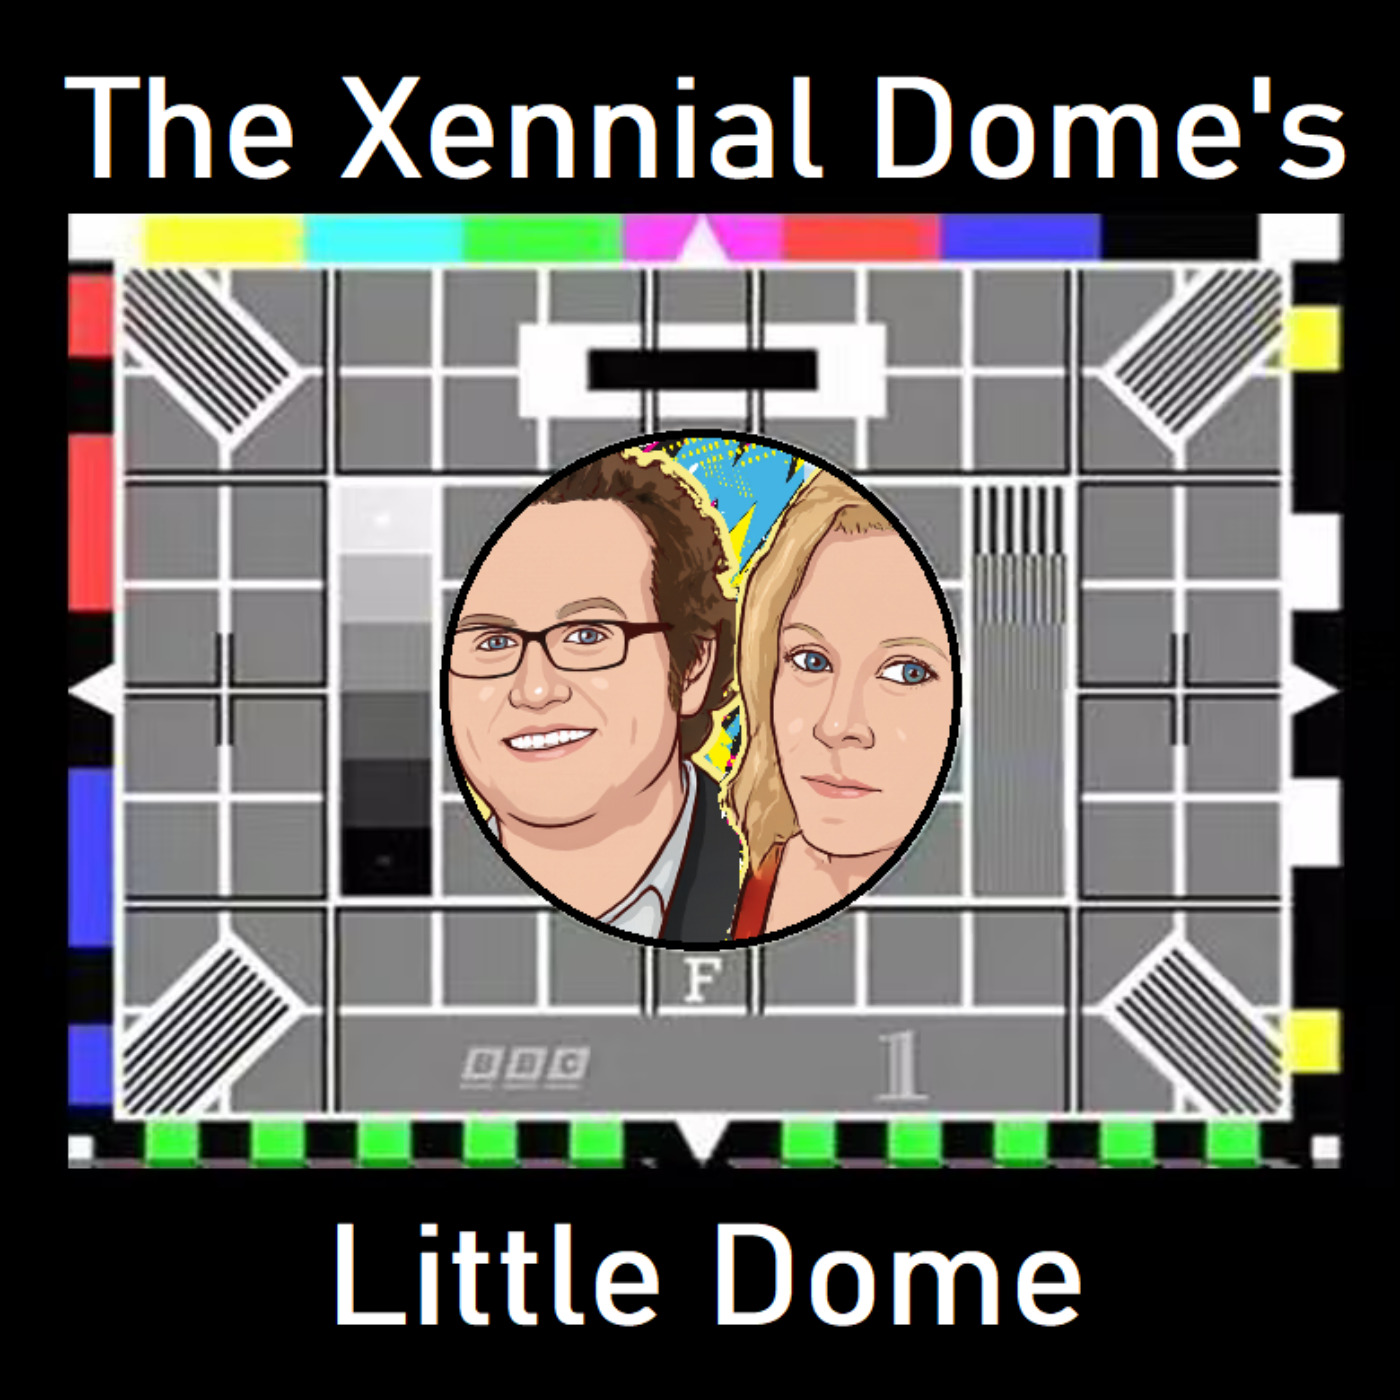 Little Dome: February 2016 (David Cameron's Toilet Habits)